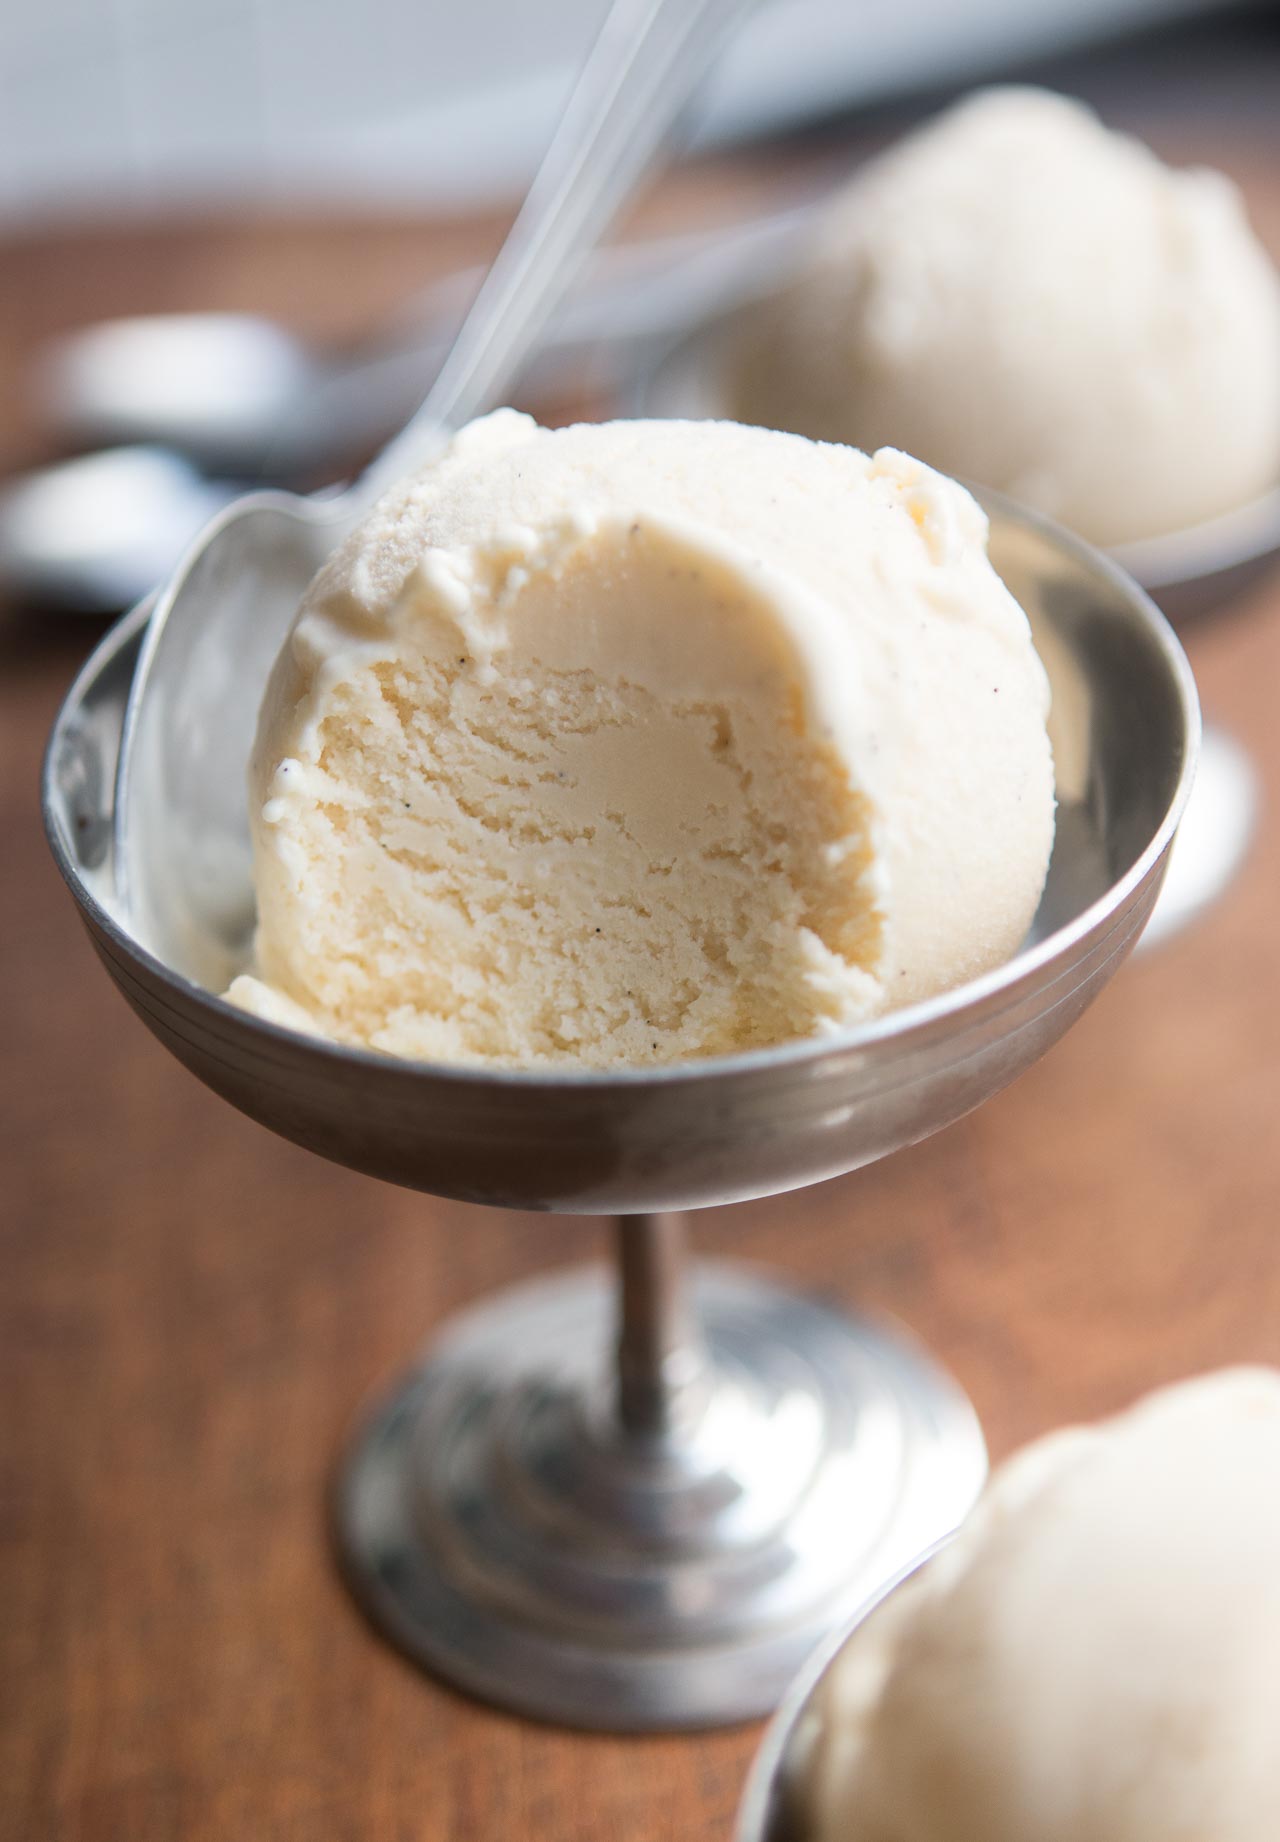 https://www.davidlebovitz.com/wp-content/uploads/2009/02/Vanilla-ice-cream-recipe-cherry-compote-4.jpg